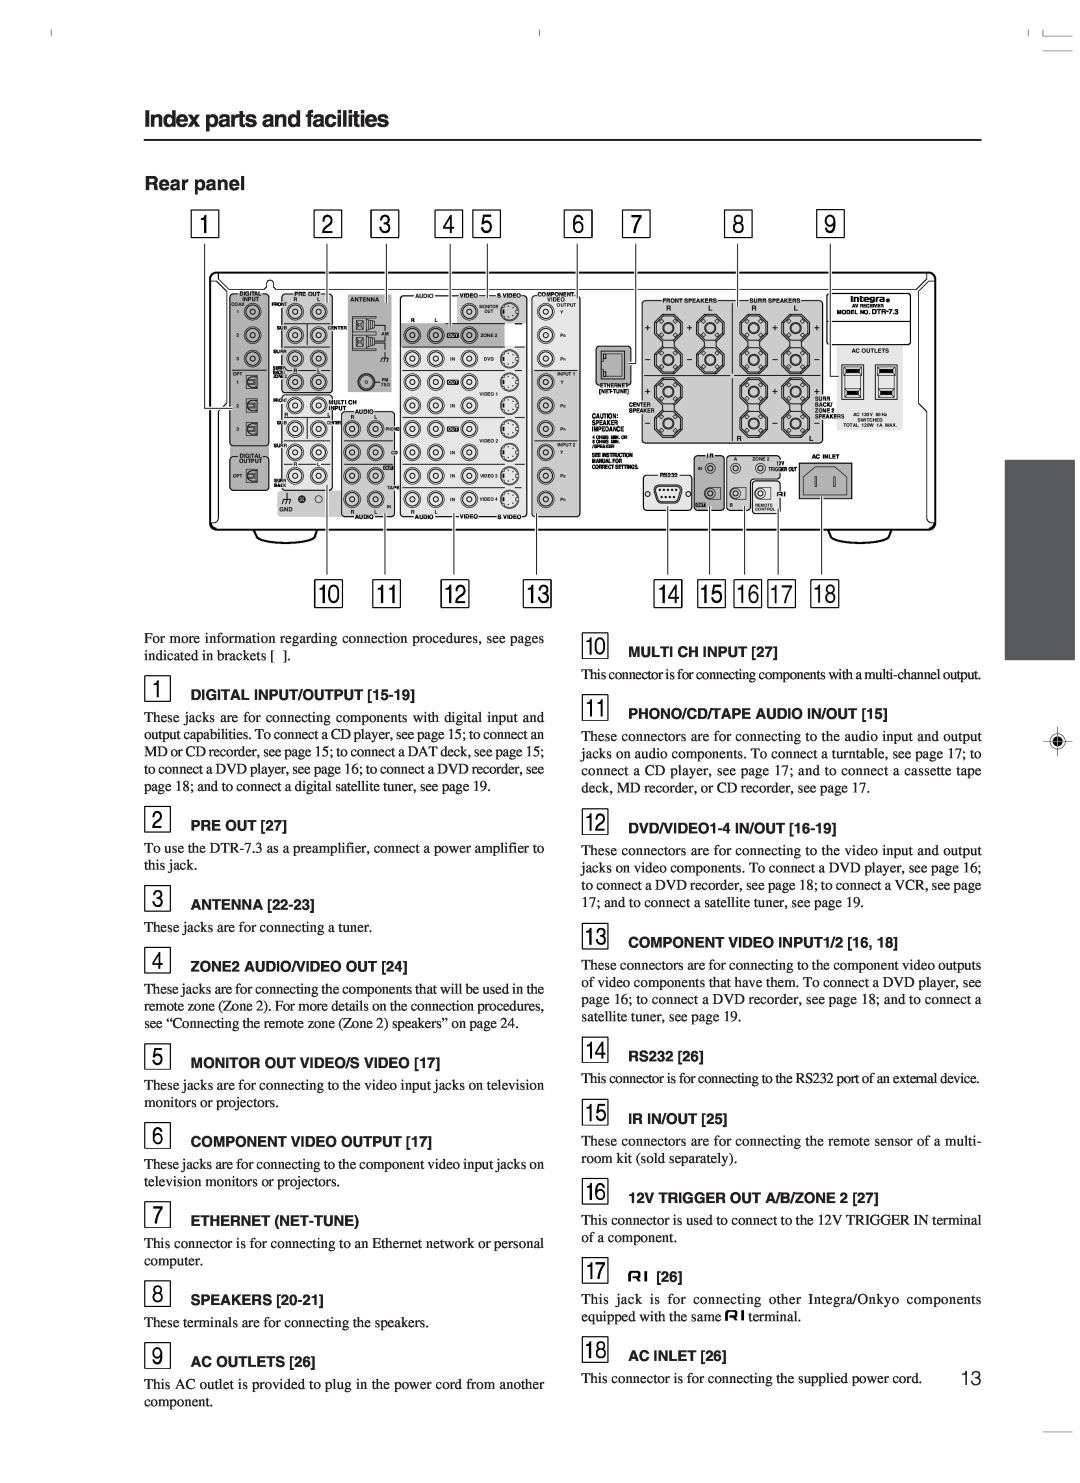 Integra DTR-7.3 instruction manual Rear panel, Index parts and facilities 